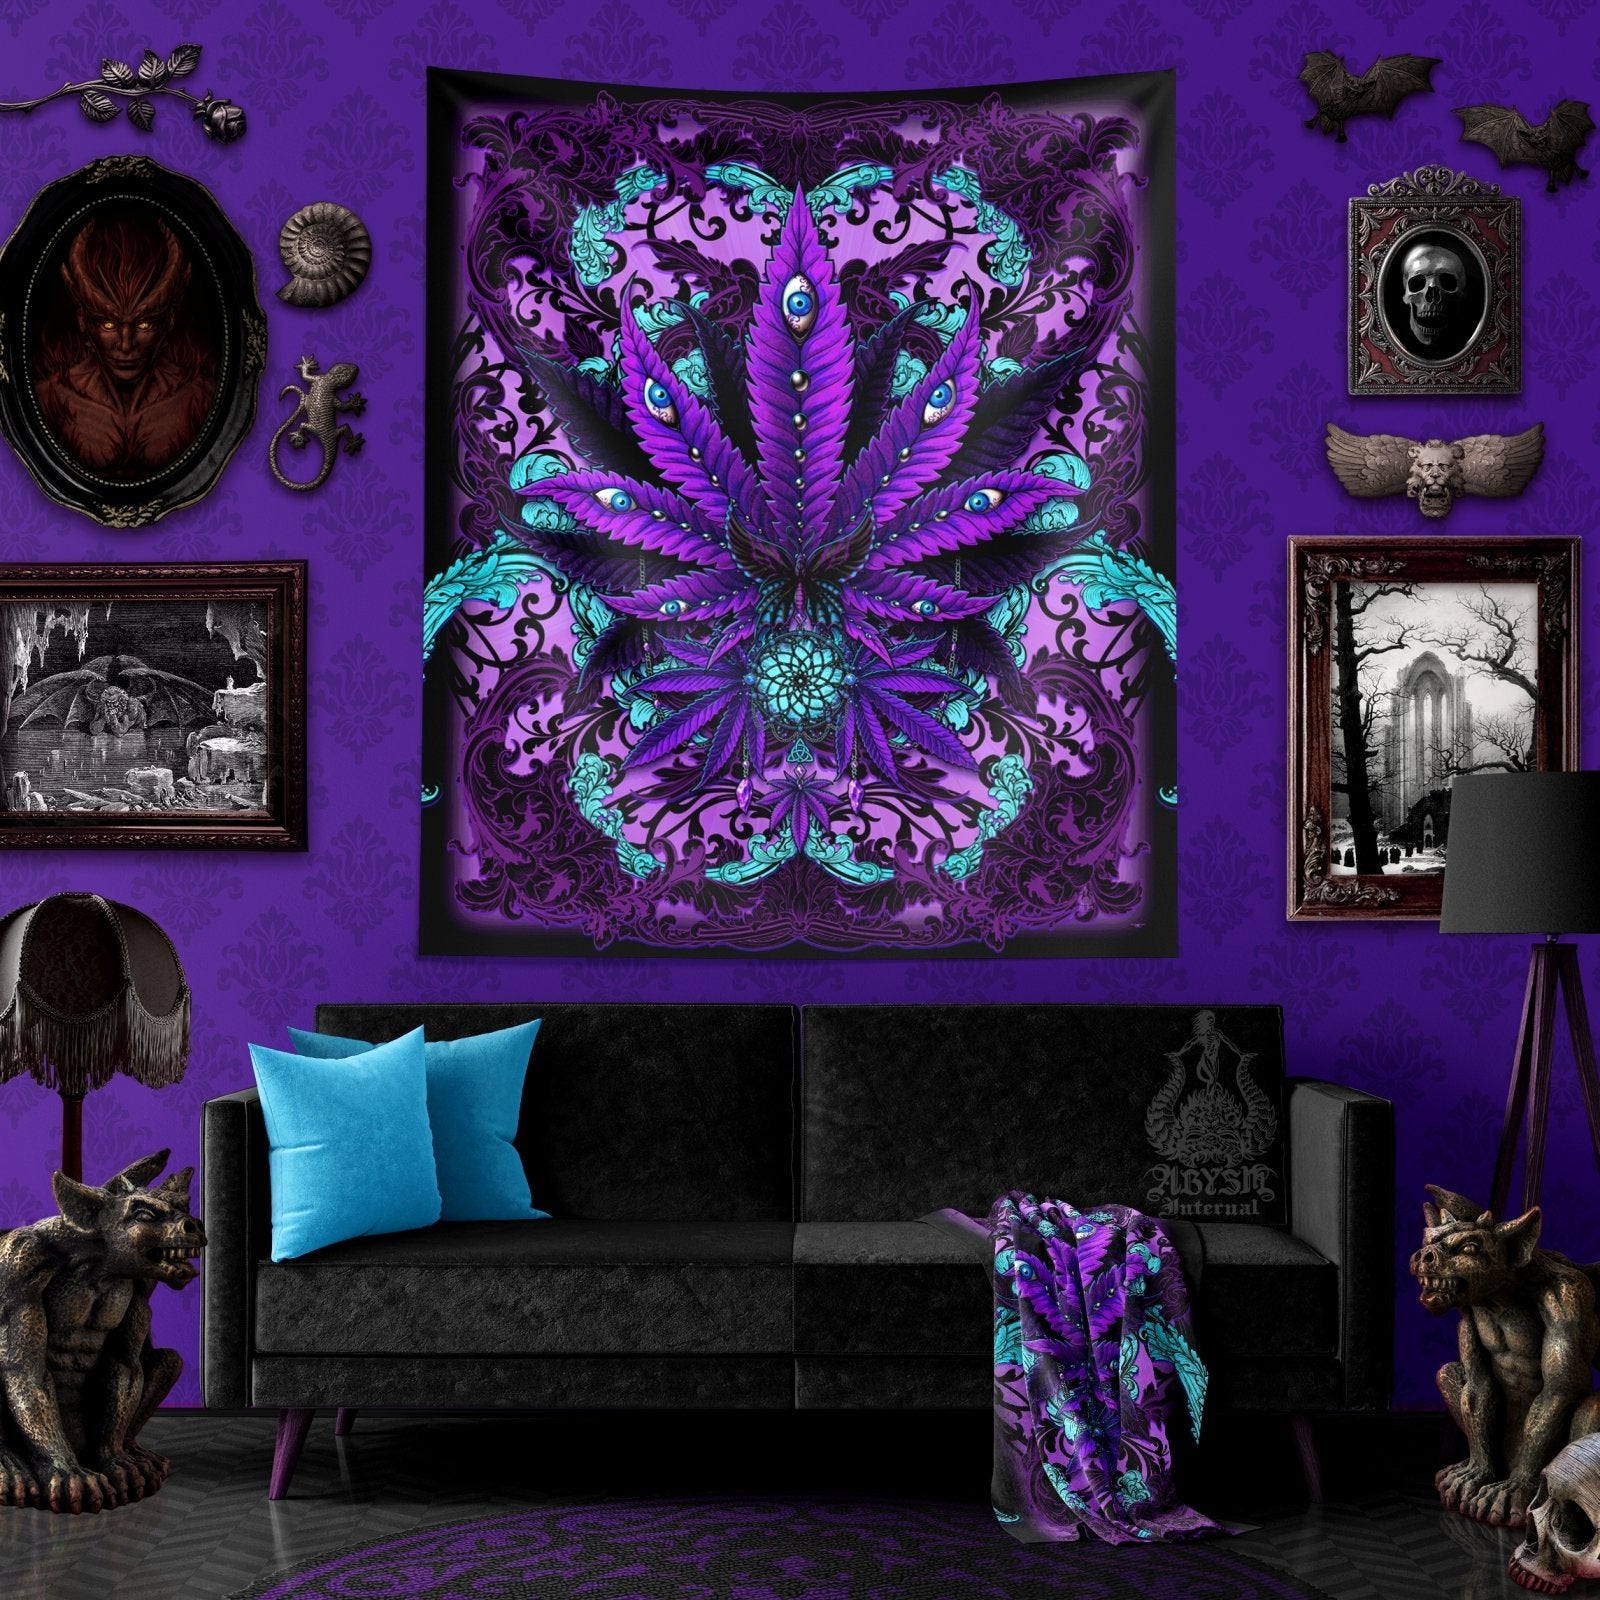 Gothic Weed Tapestry, Marijuana Shop Decor, Cannabis Wall Hanging, Pastel Goth Home Decor, Art Print, 420 Gift - Abysm Internal